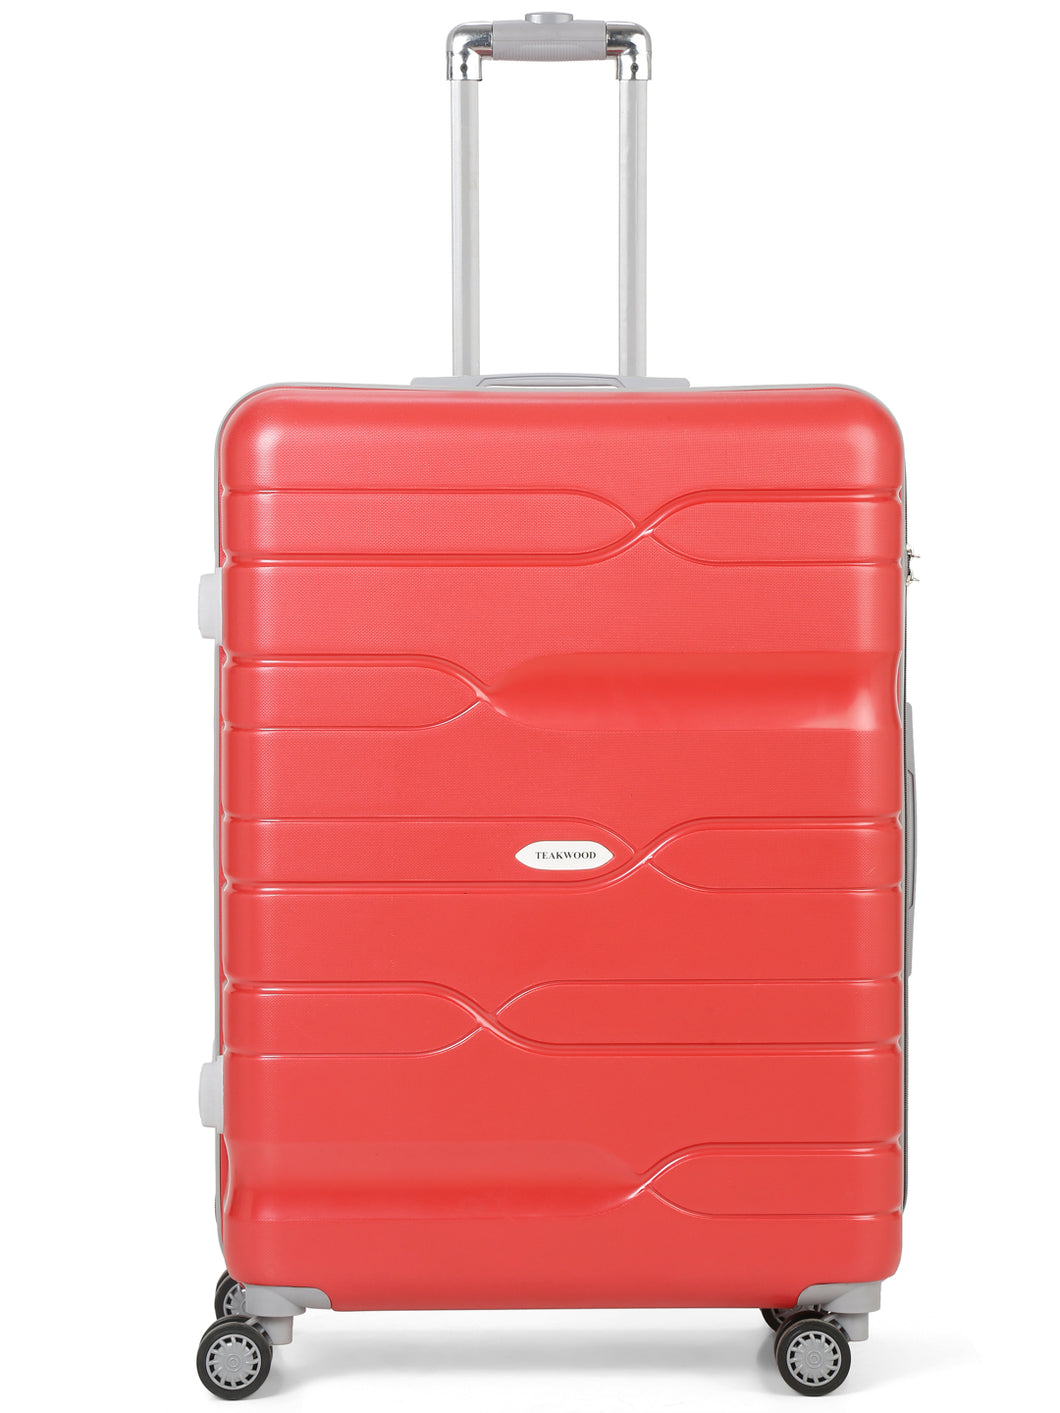 Teakwood Leather Red Patterned Hard-Sided Trolley Bag